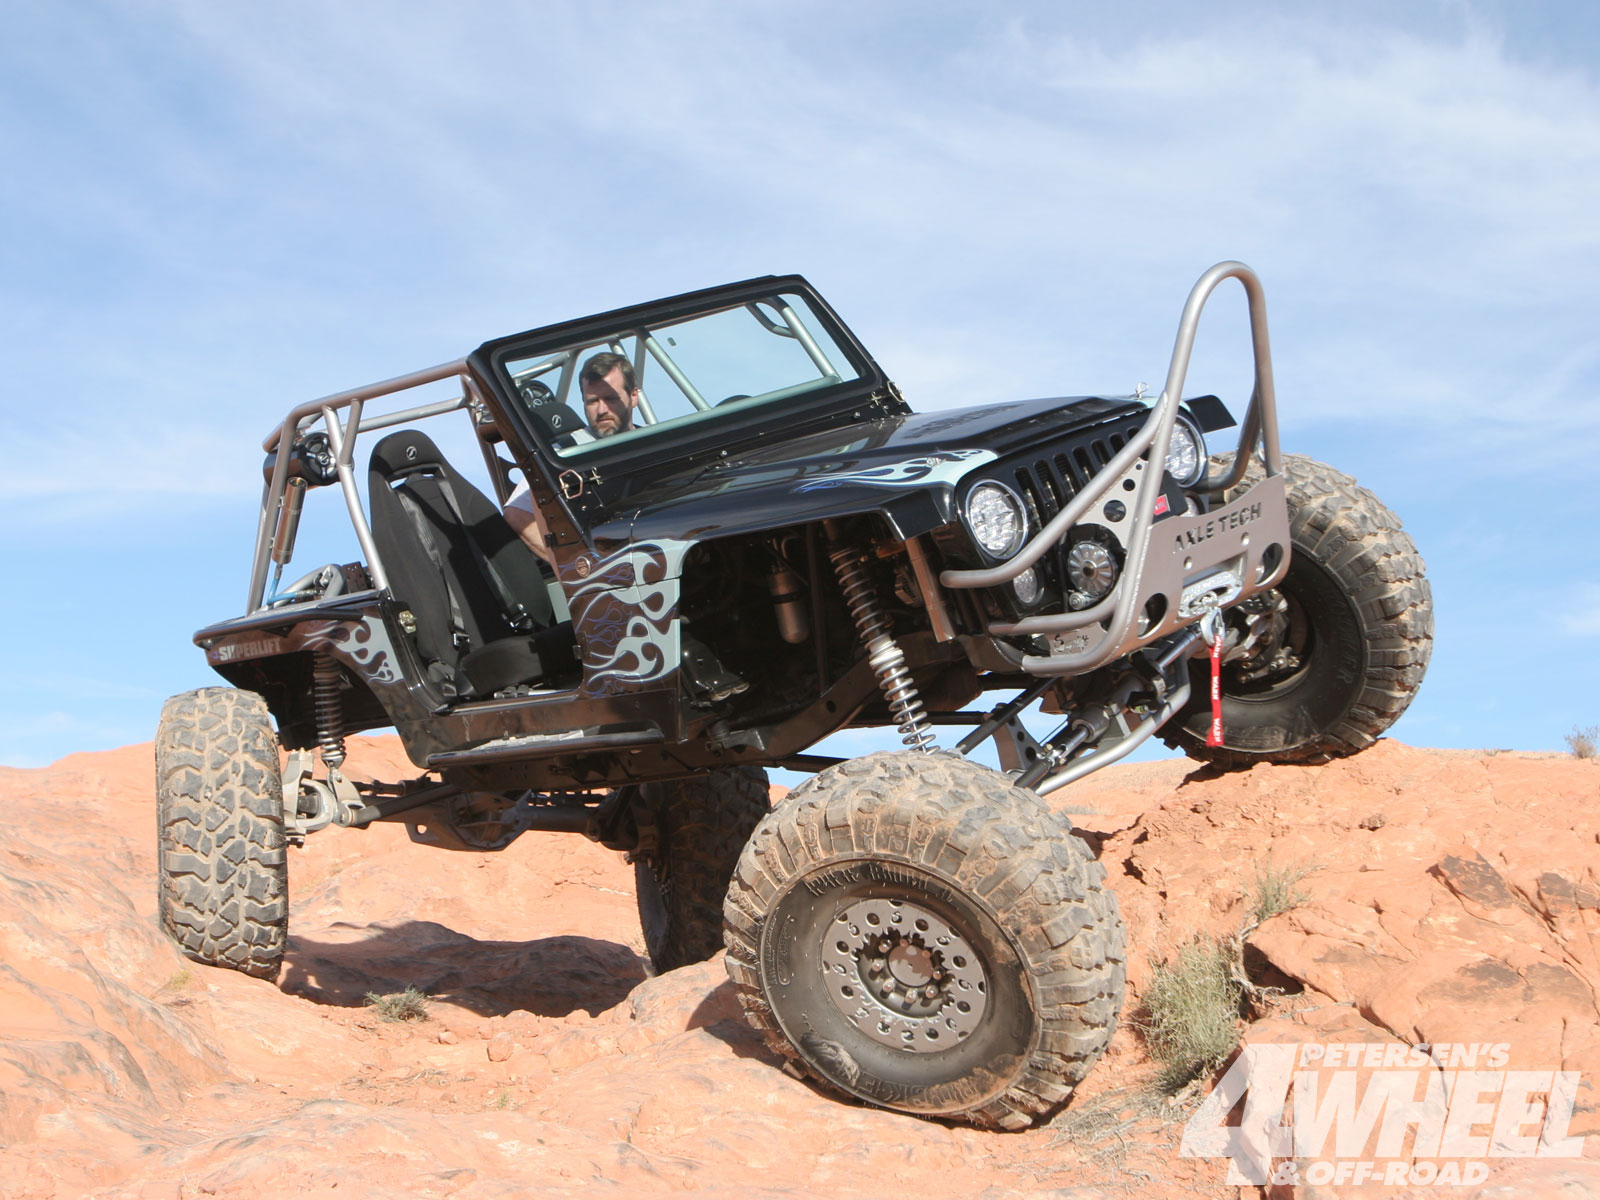 Jeep Wrangler Rock Crawler Photo: 4wheeloffroad